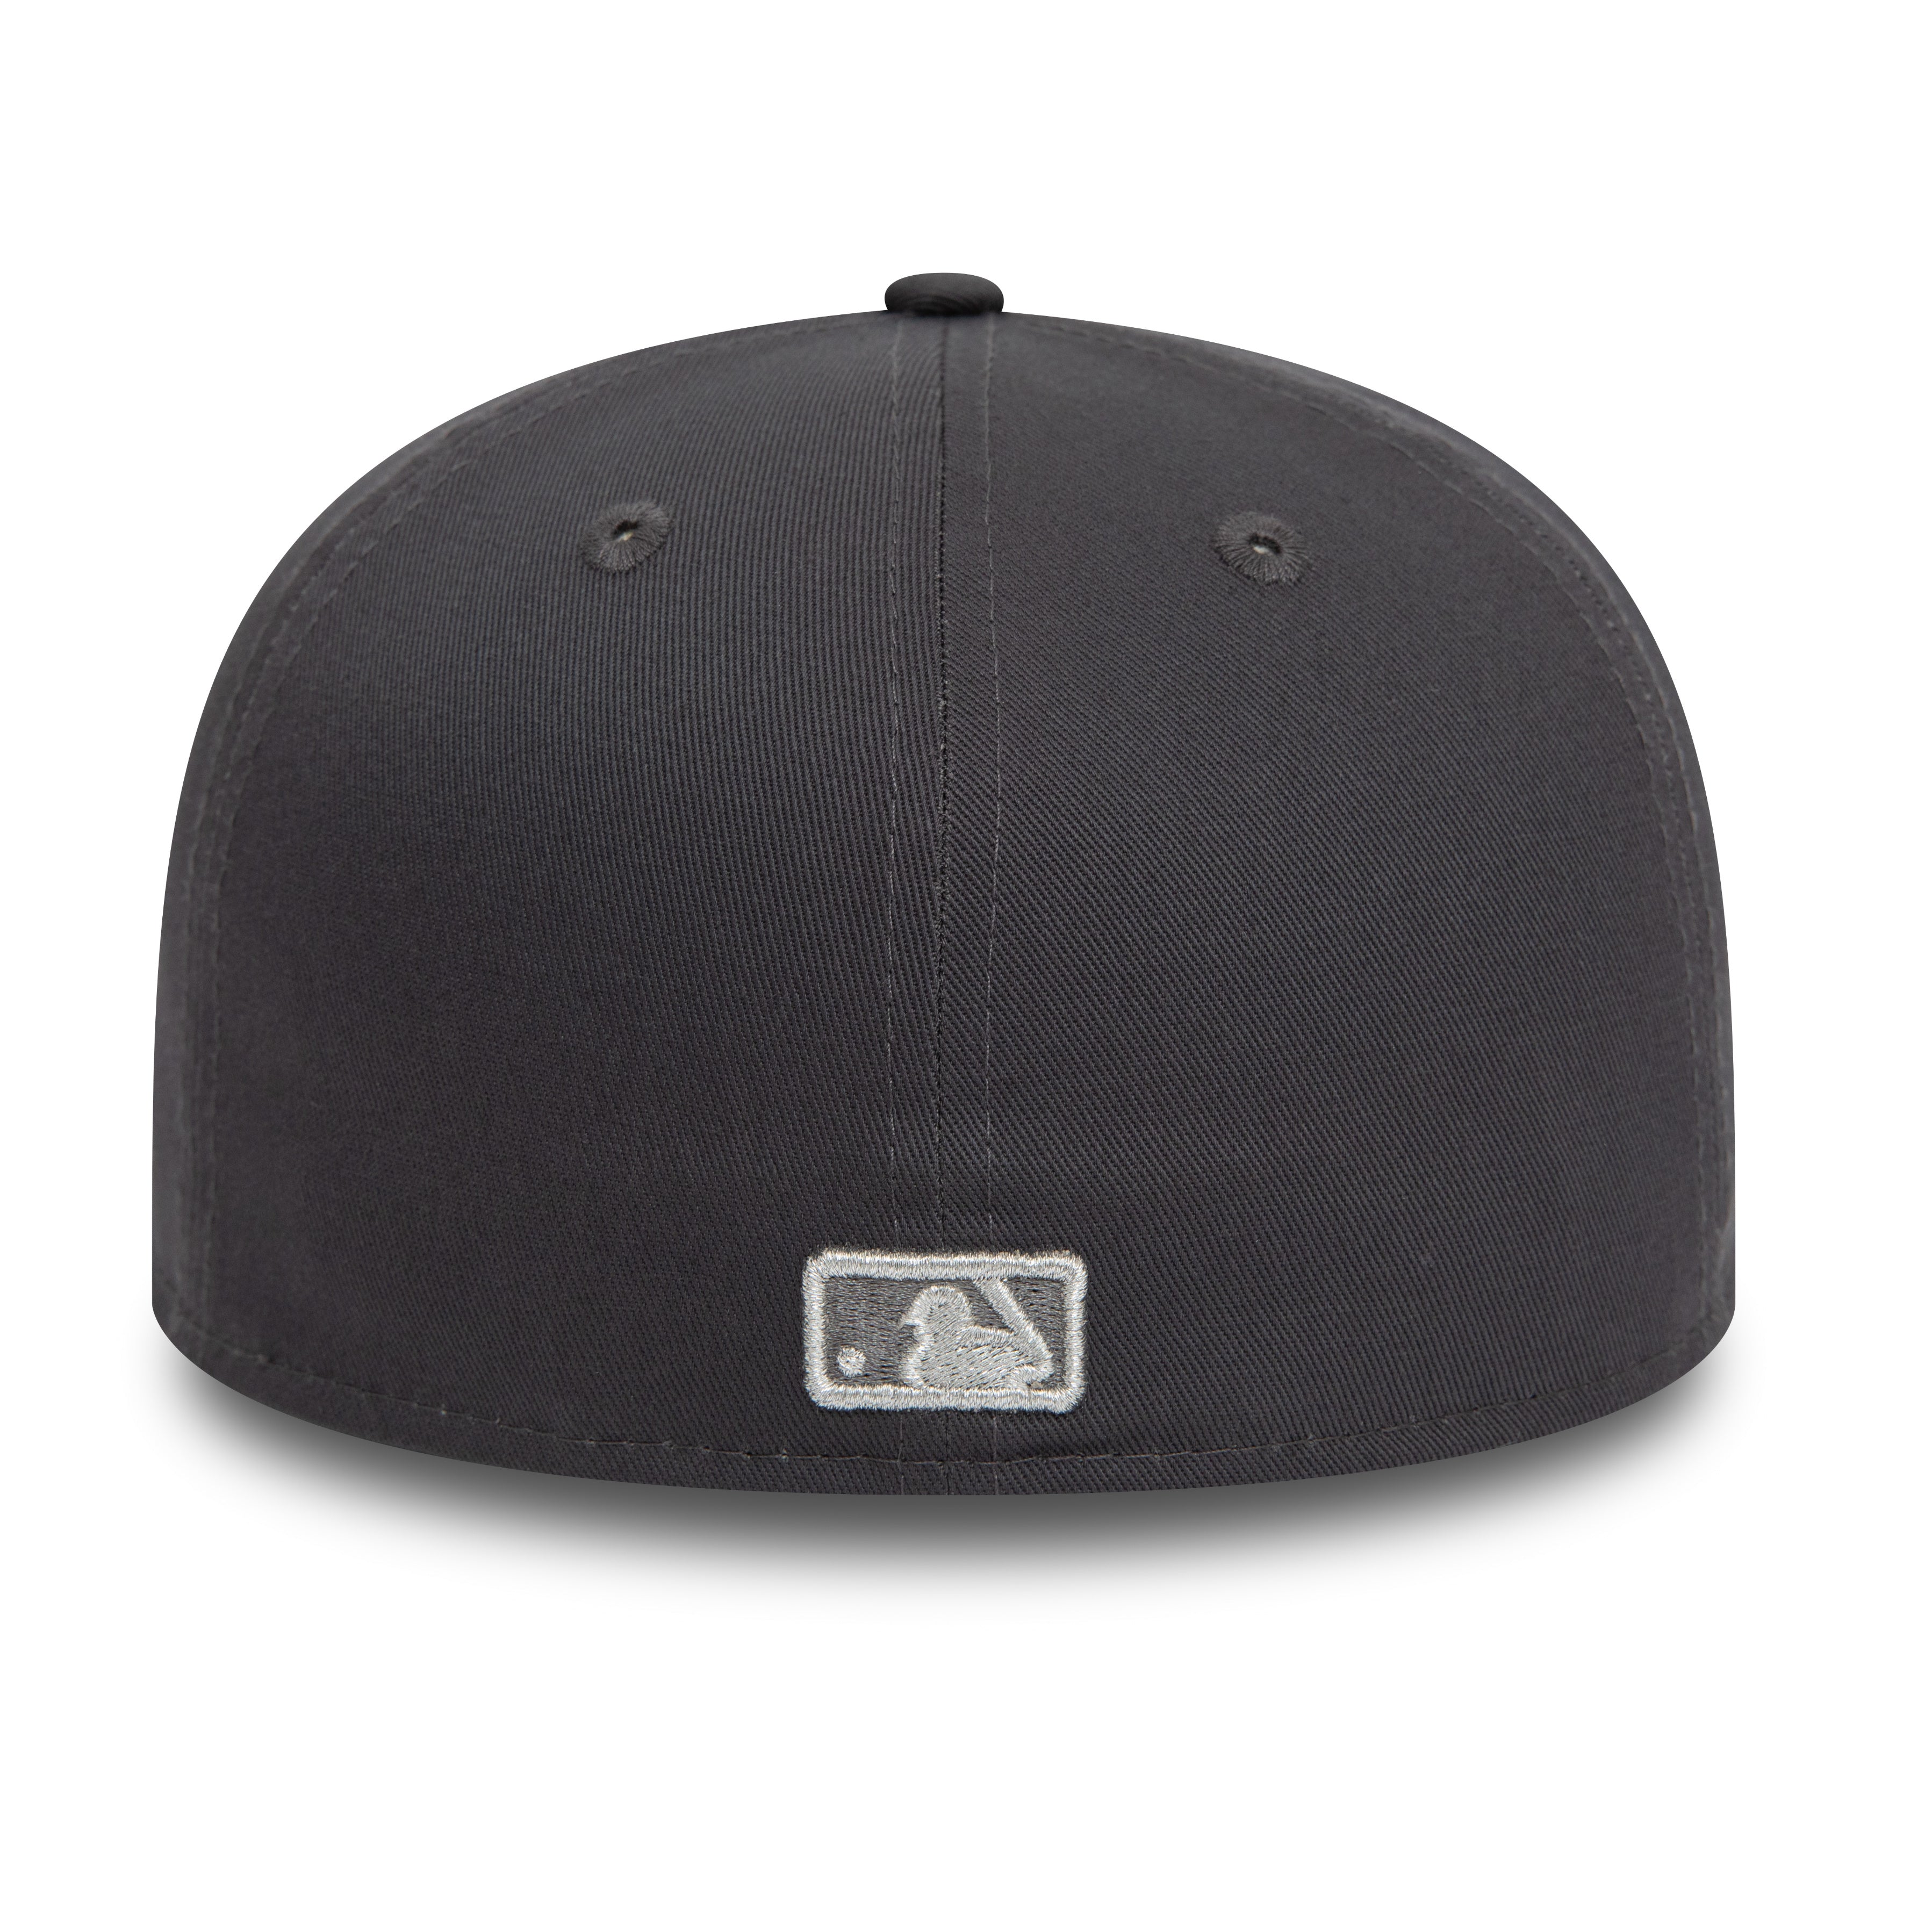 NEW ERA 59FIFTY MLB NEW YORK YANKEES METALLIC OUTLINE DARK GREY FITTED CAP